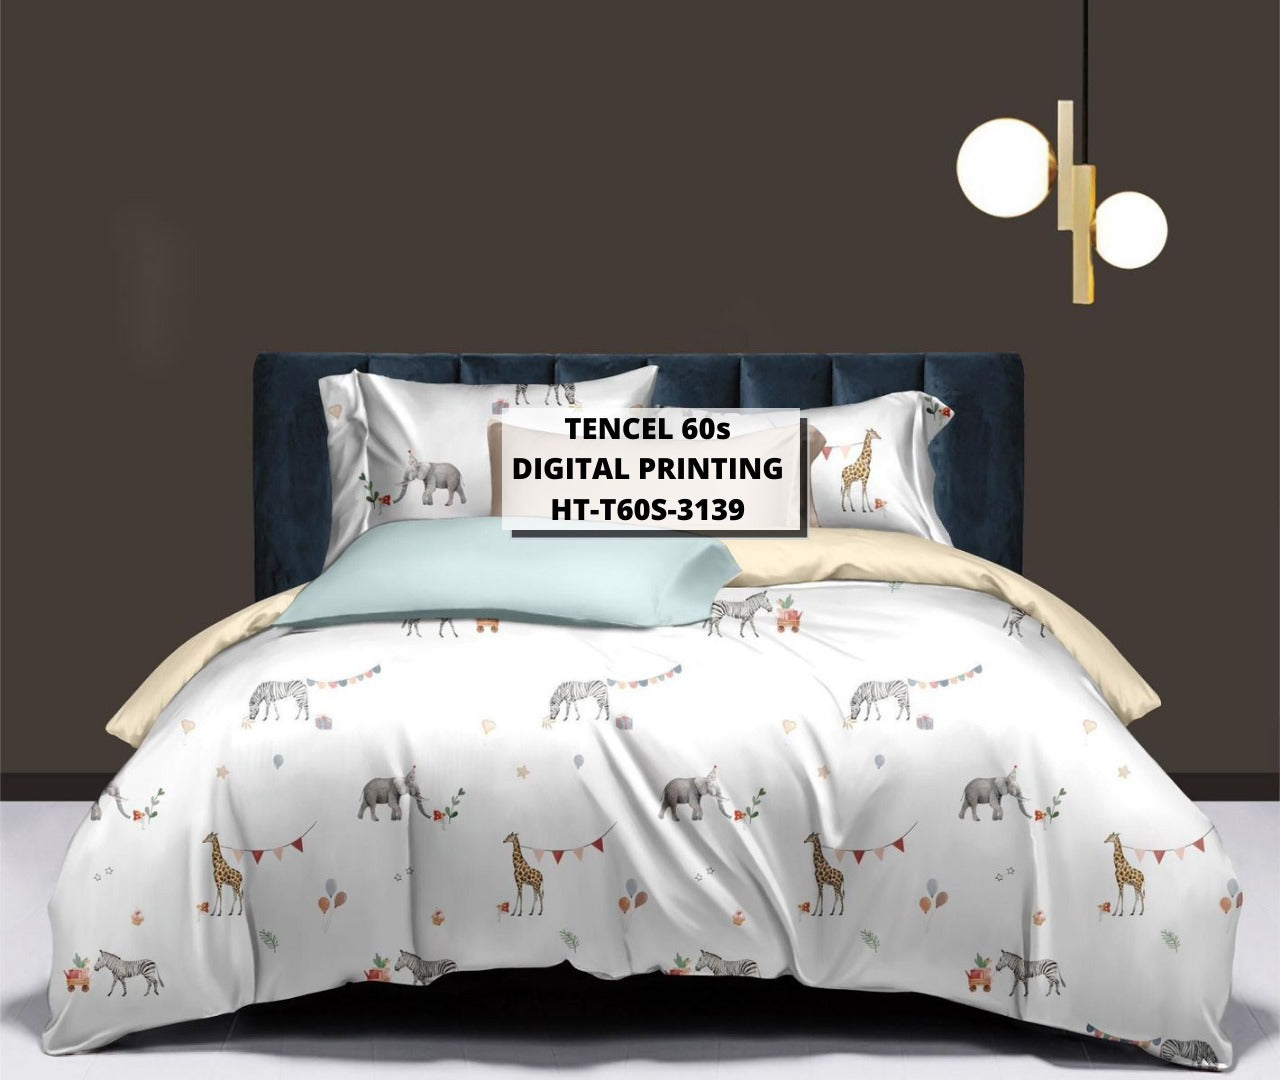 100% Tencel™ Premium Bed sheet -For Lil’ Boy